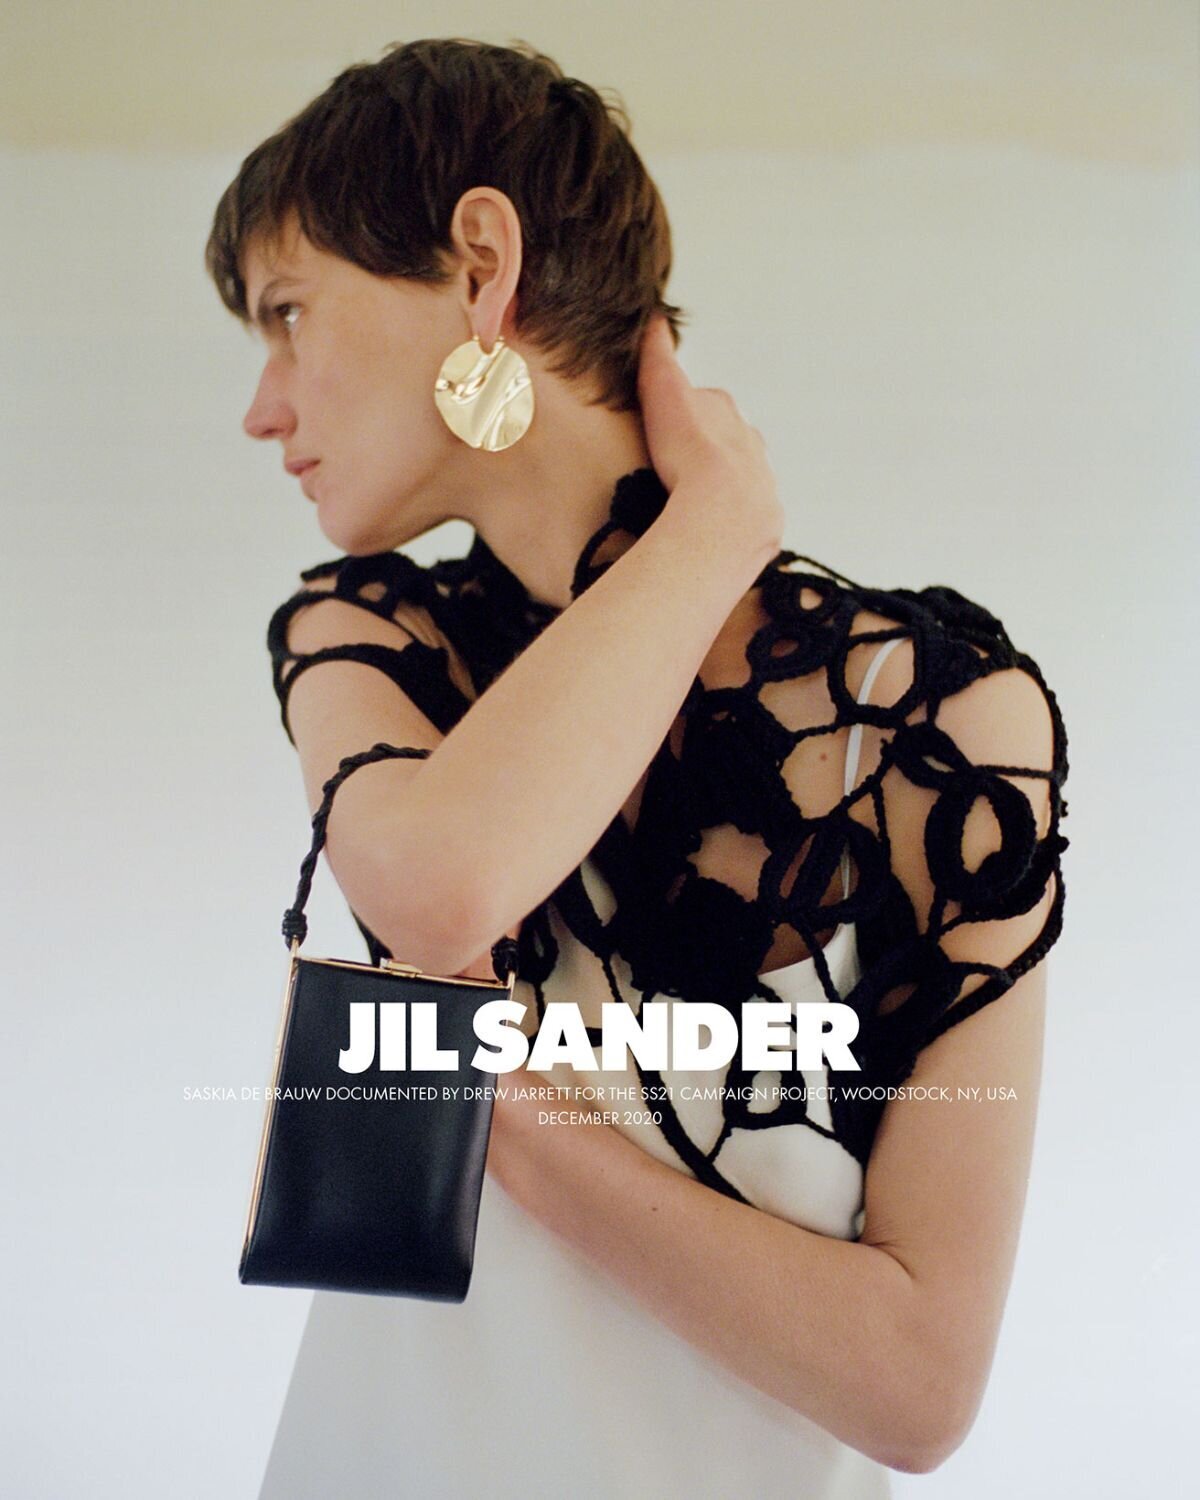 Saskia-de-Brauw-by-Drew-Jarrett-for-Jil-Sander-Spring-Summer-2021-Ad-Campaign-3.jpg